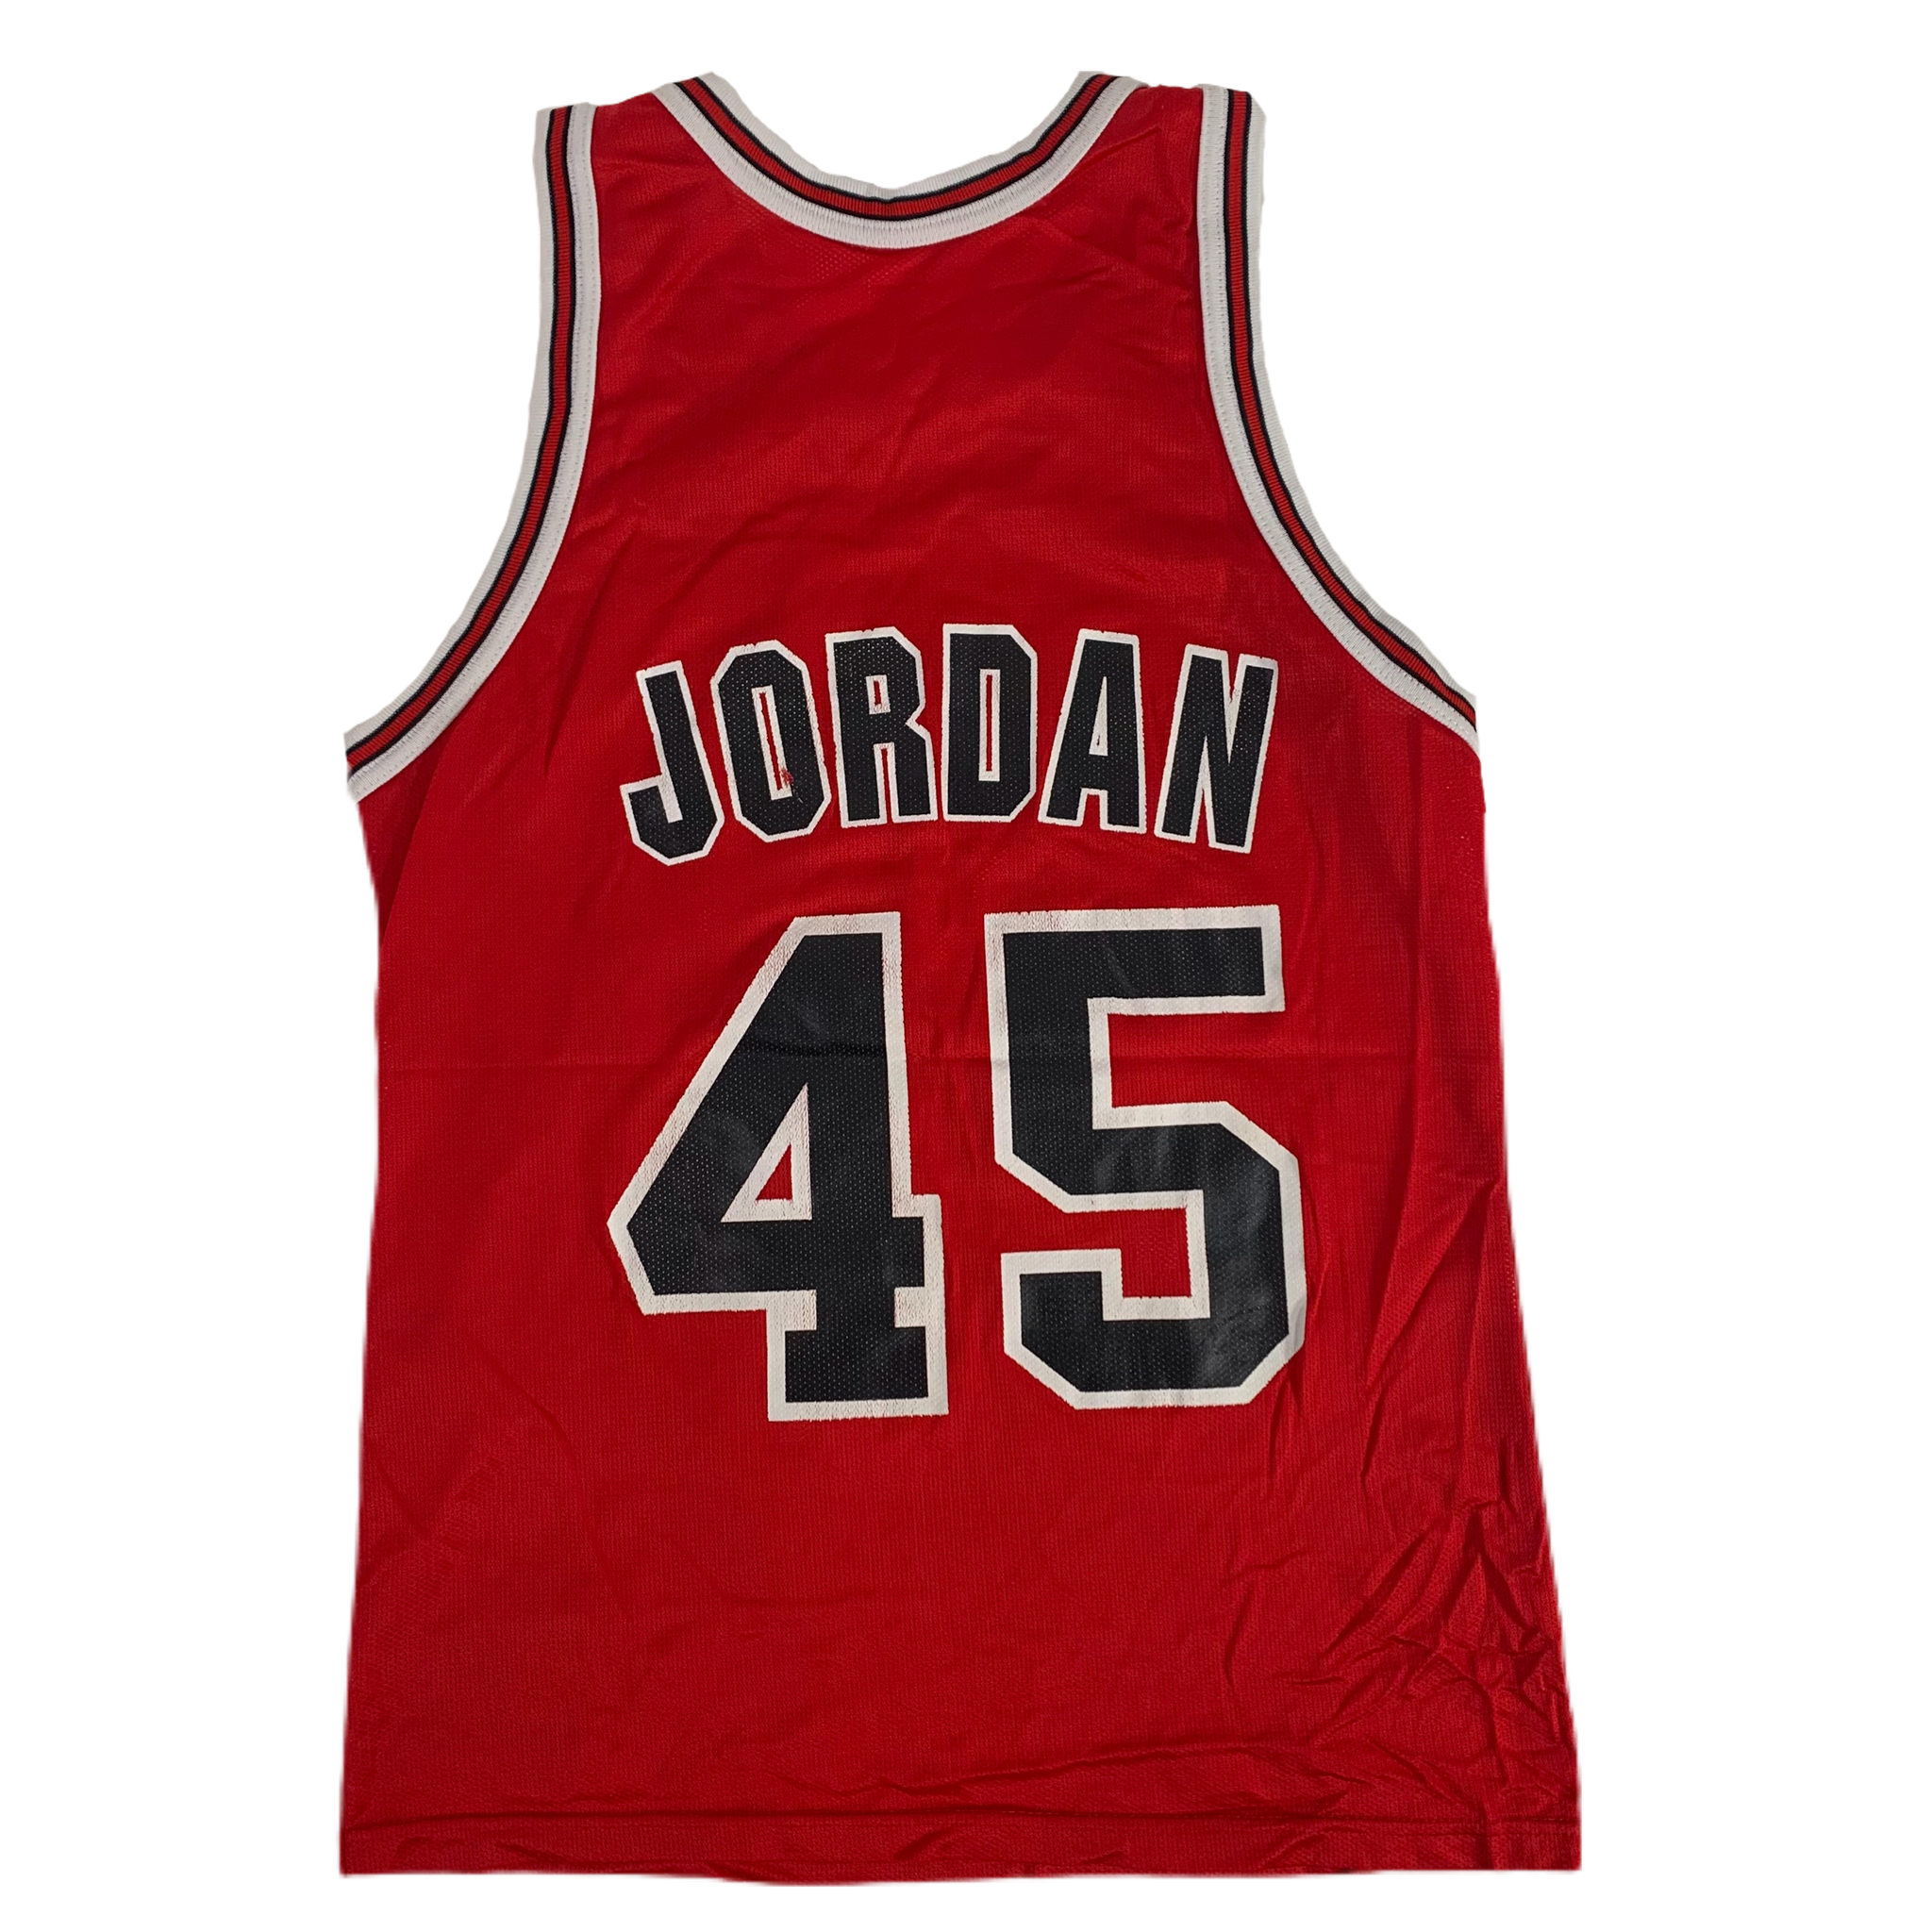 Vintage Chicago Bulls Michael Jordan #23 Champion Basketball